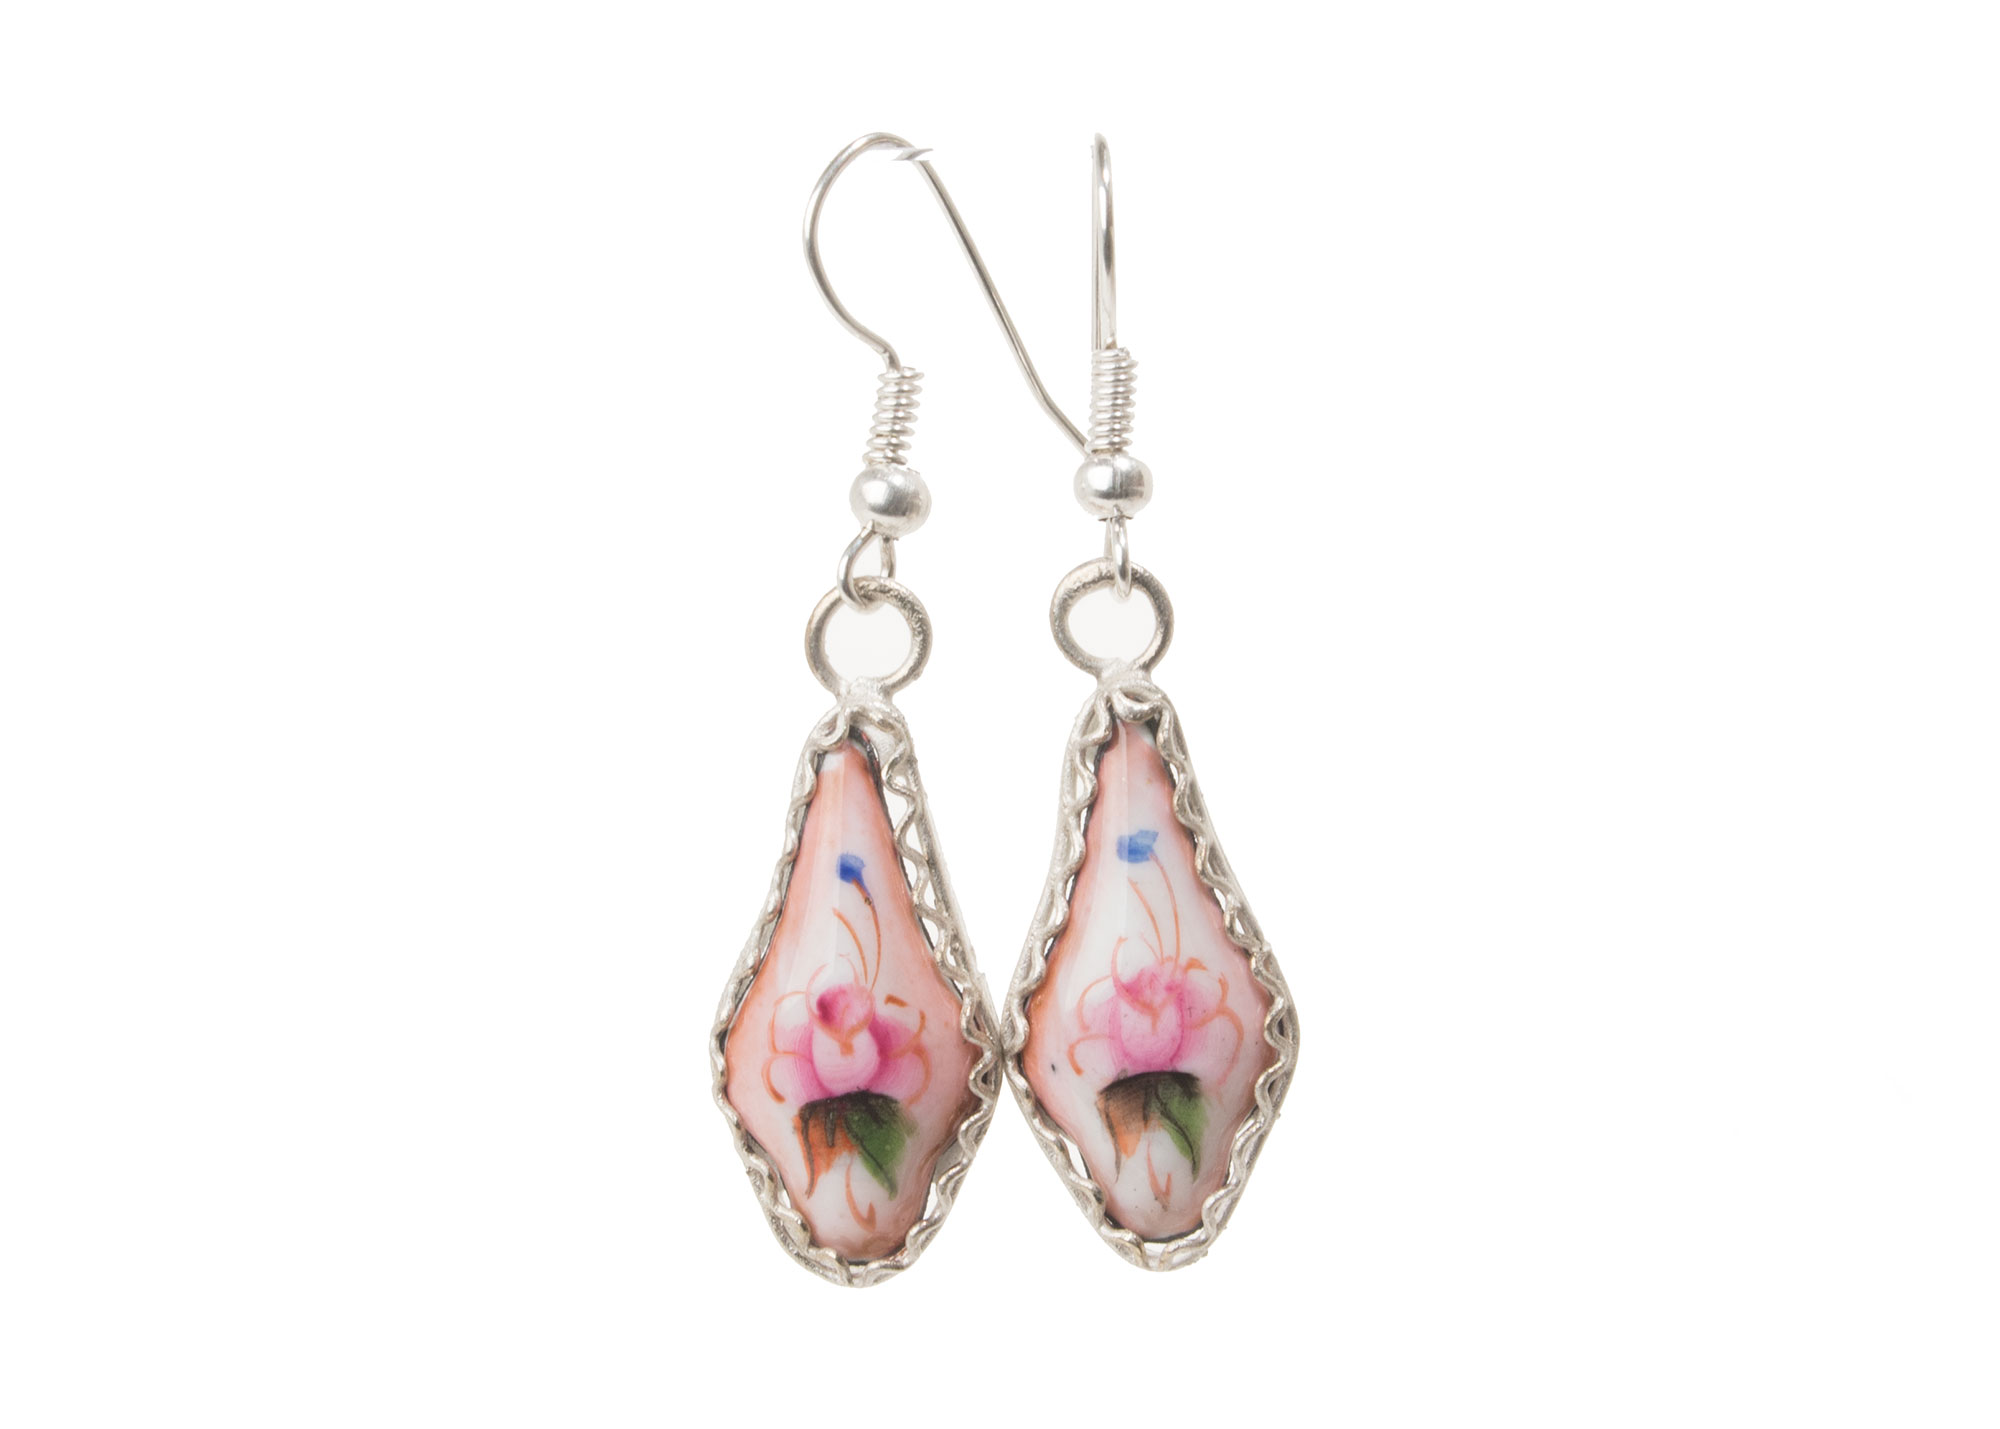 Buy Finift Pink Katya Earrings at GoldenCockerel.com